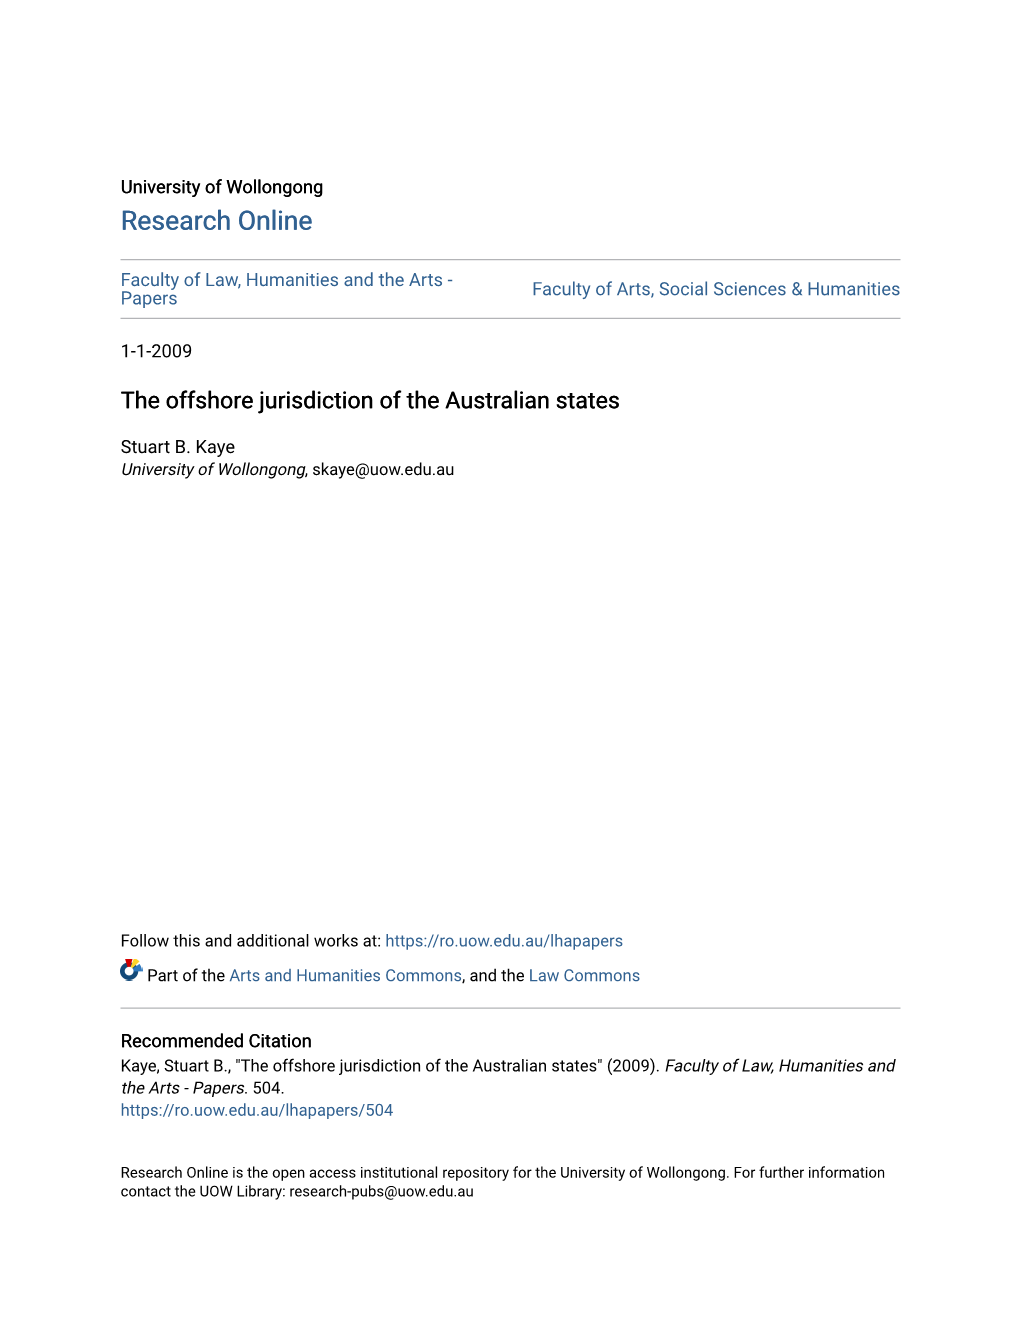 The Offshore Jurisdiction of the Australian States